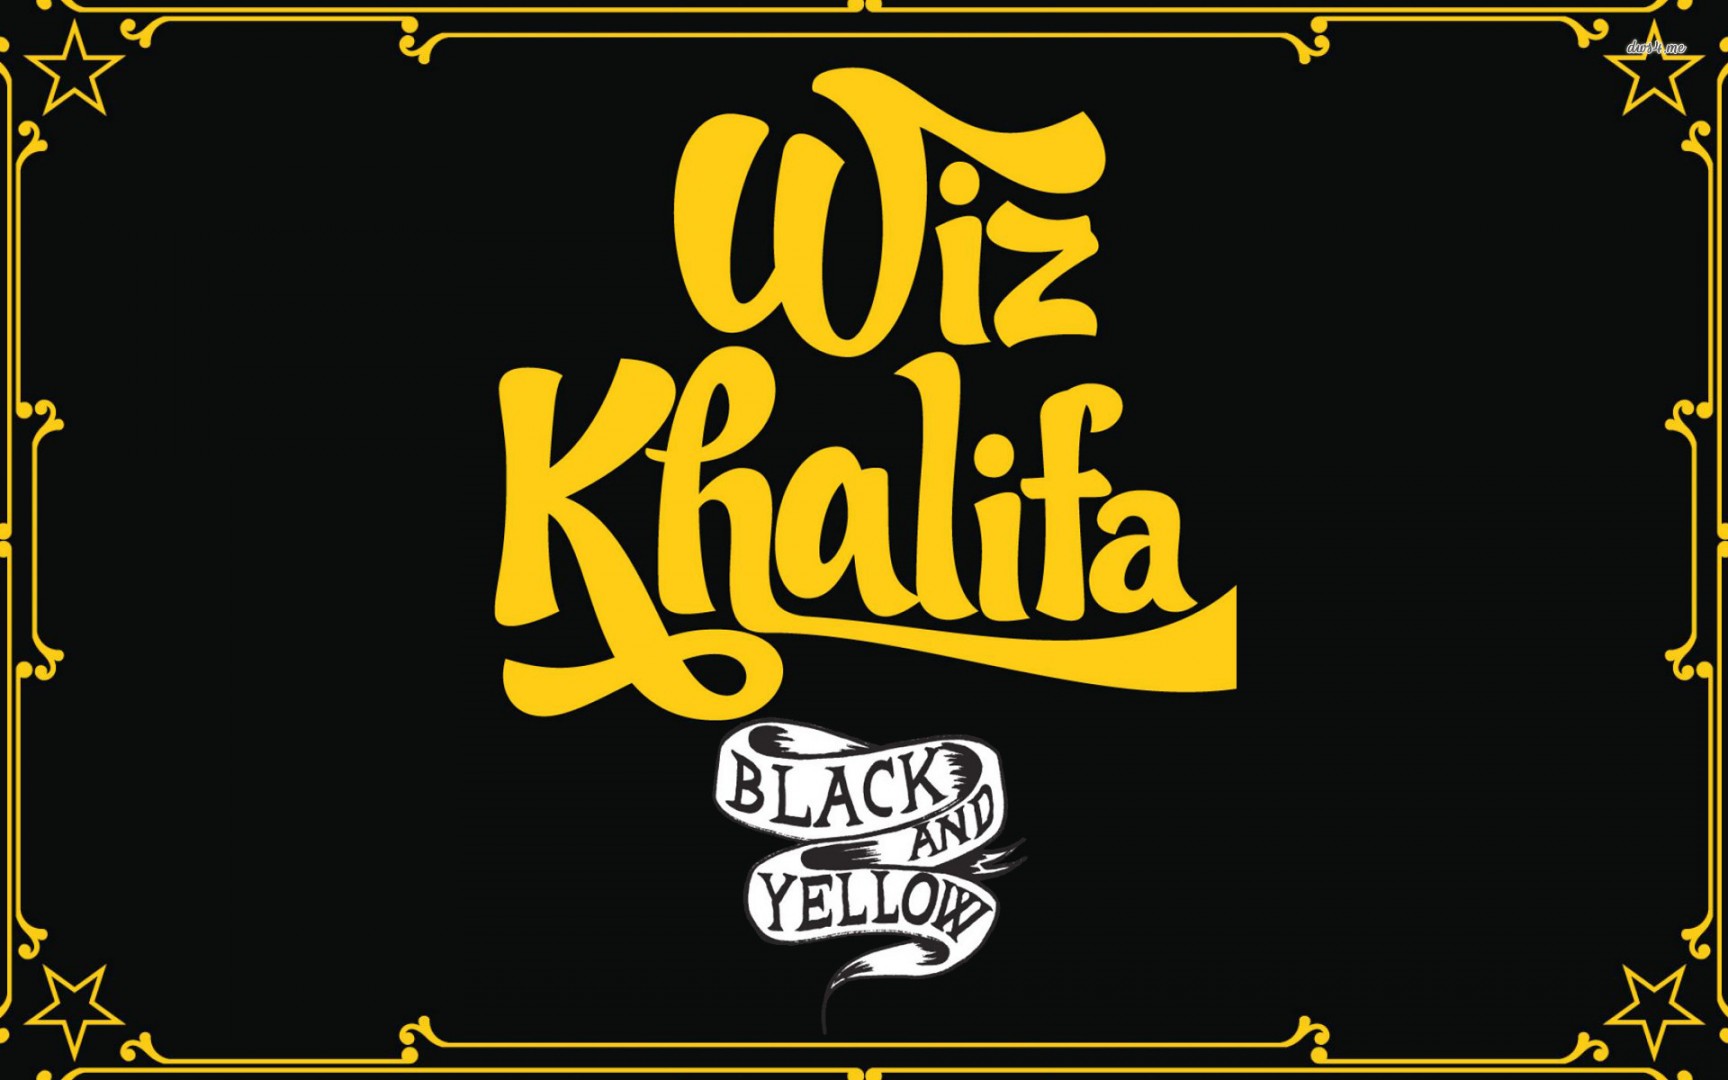 Wiz Khalifa Black And Yellow Cover Rap Wallpaper